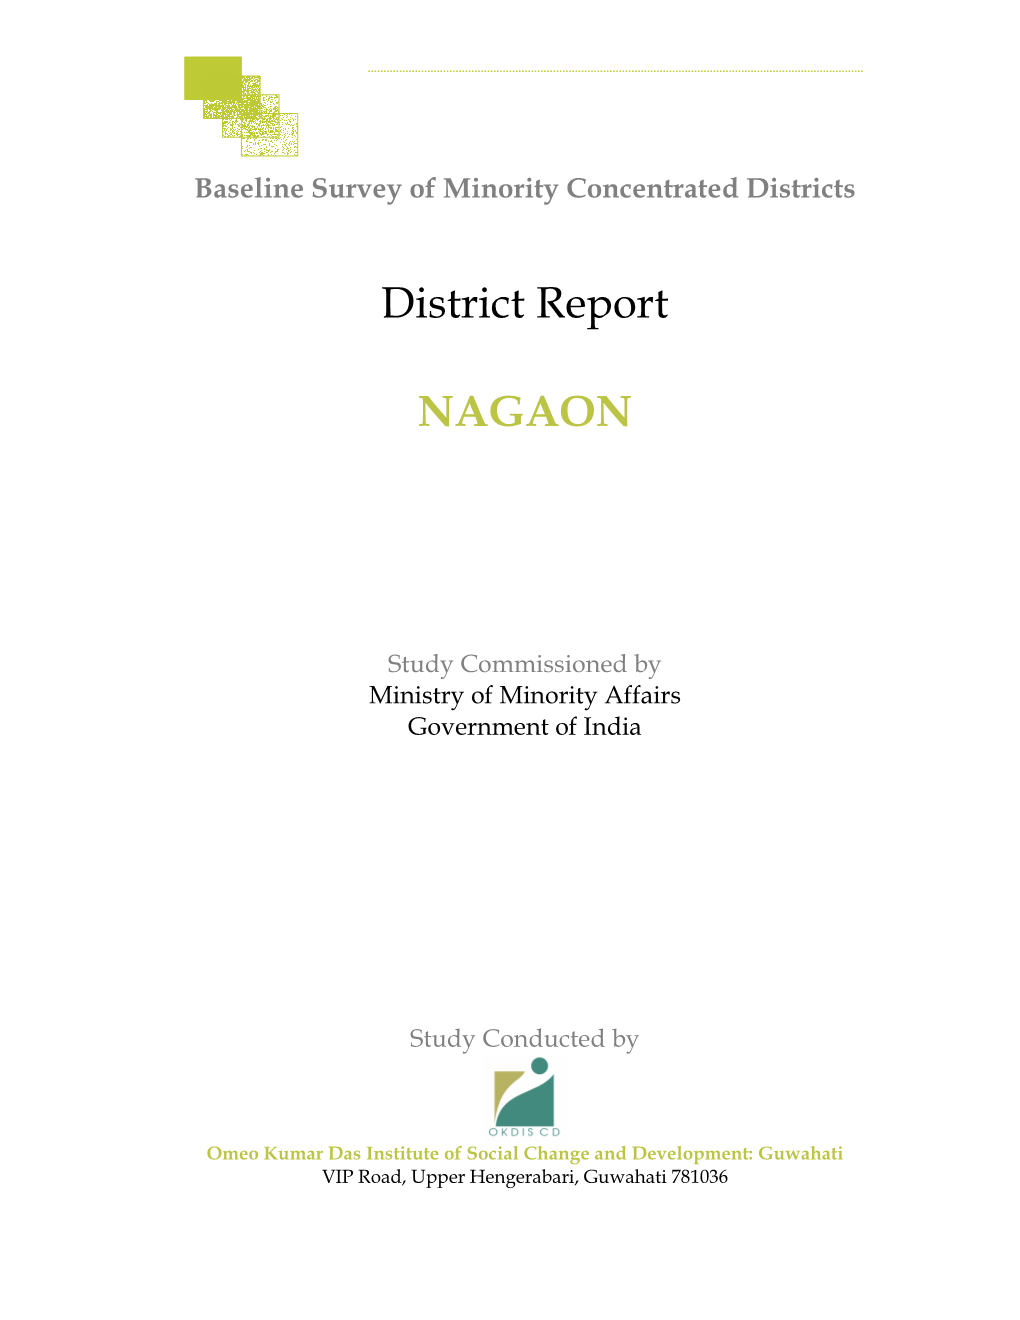 District Report NAGAON